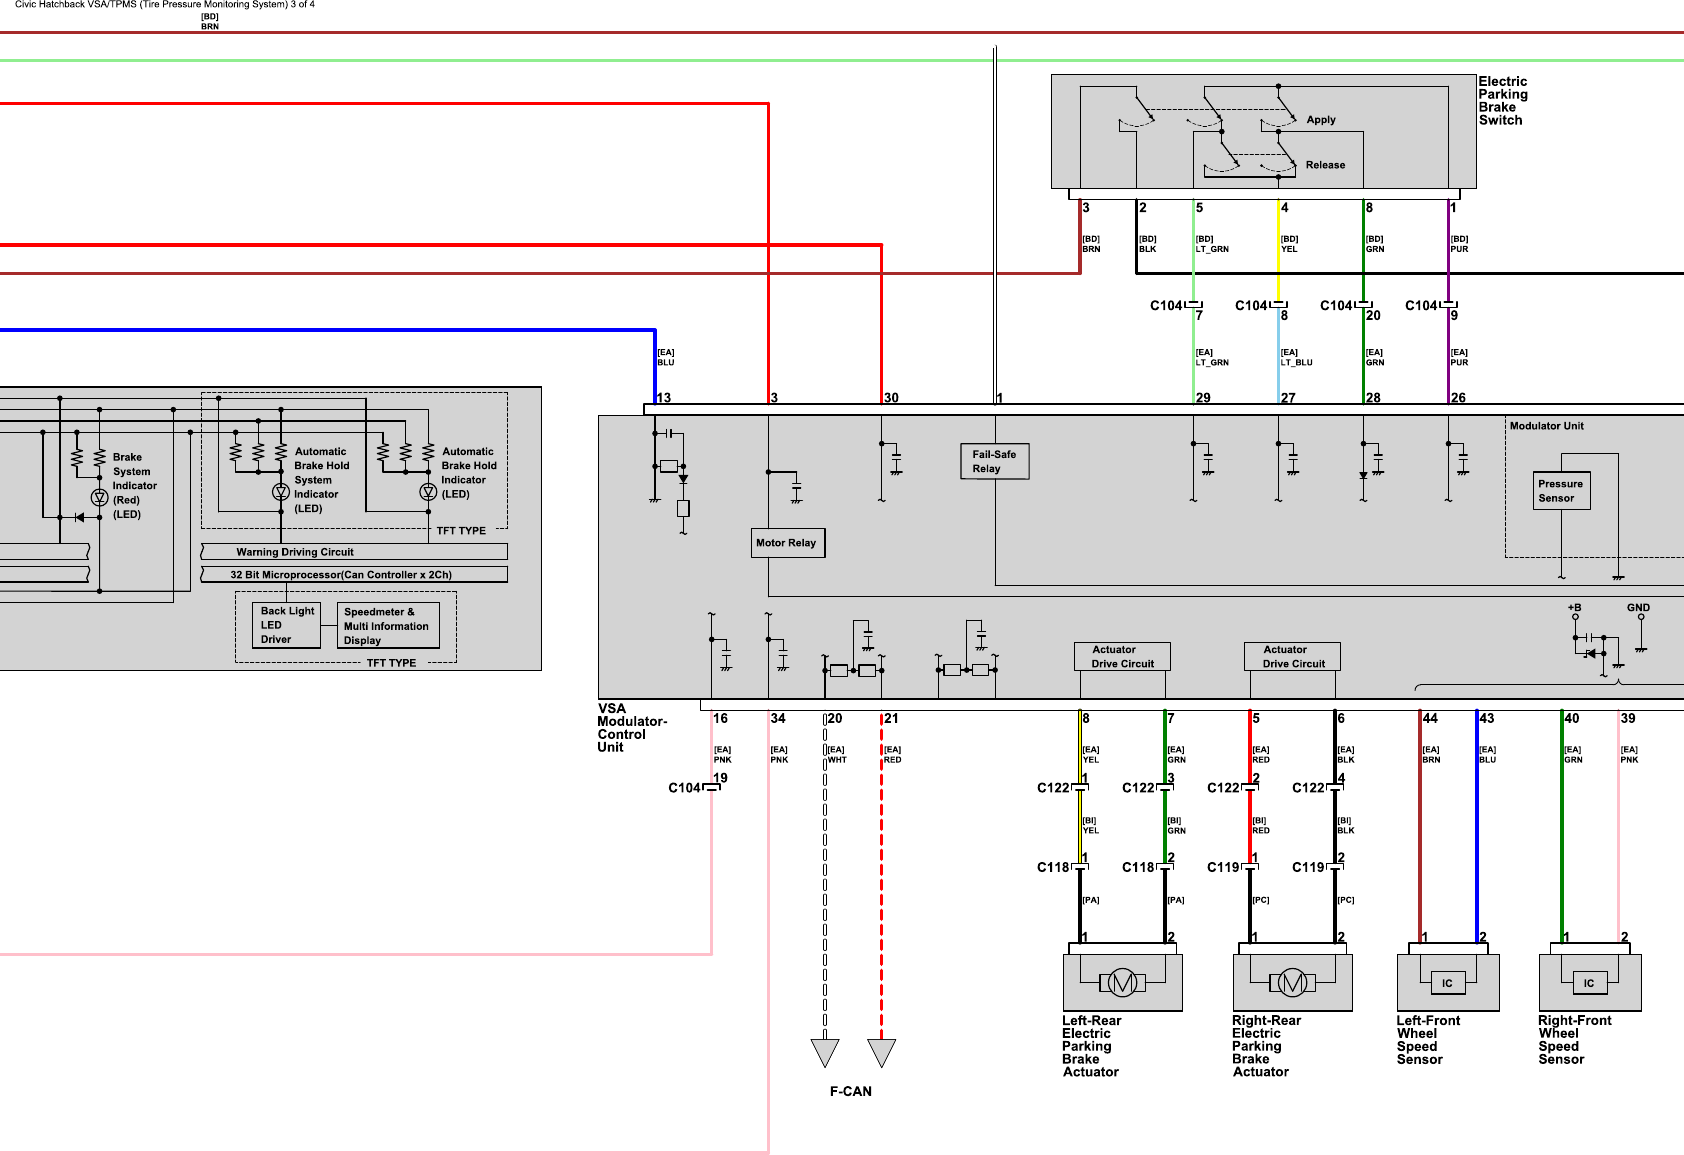 Honda Civic Electrical Wiring Diagram And Schematics